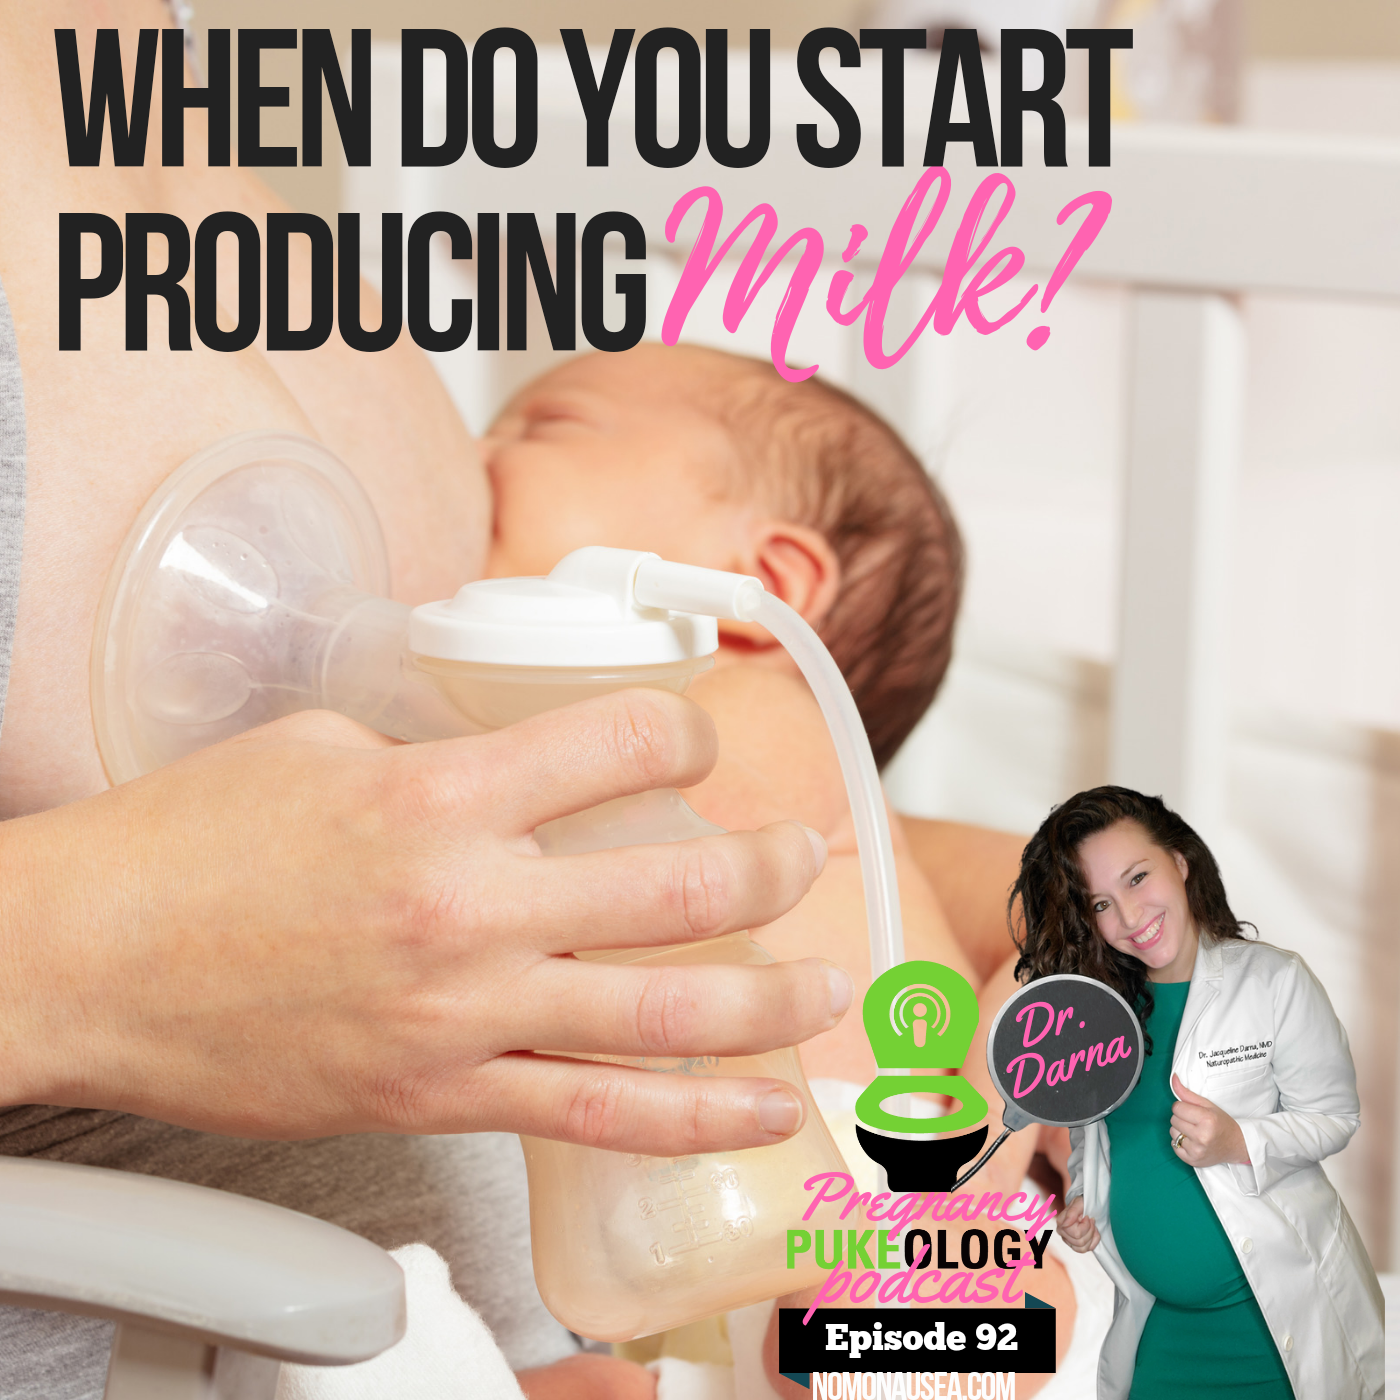 What Week In Pregnancy Do You Start Producing Milk?